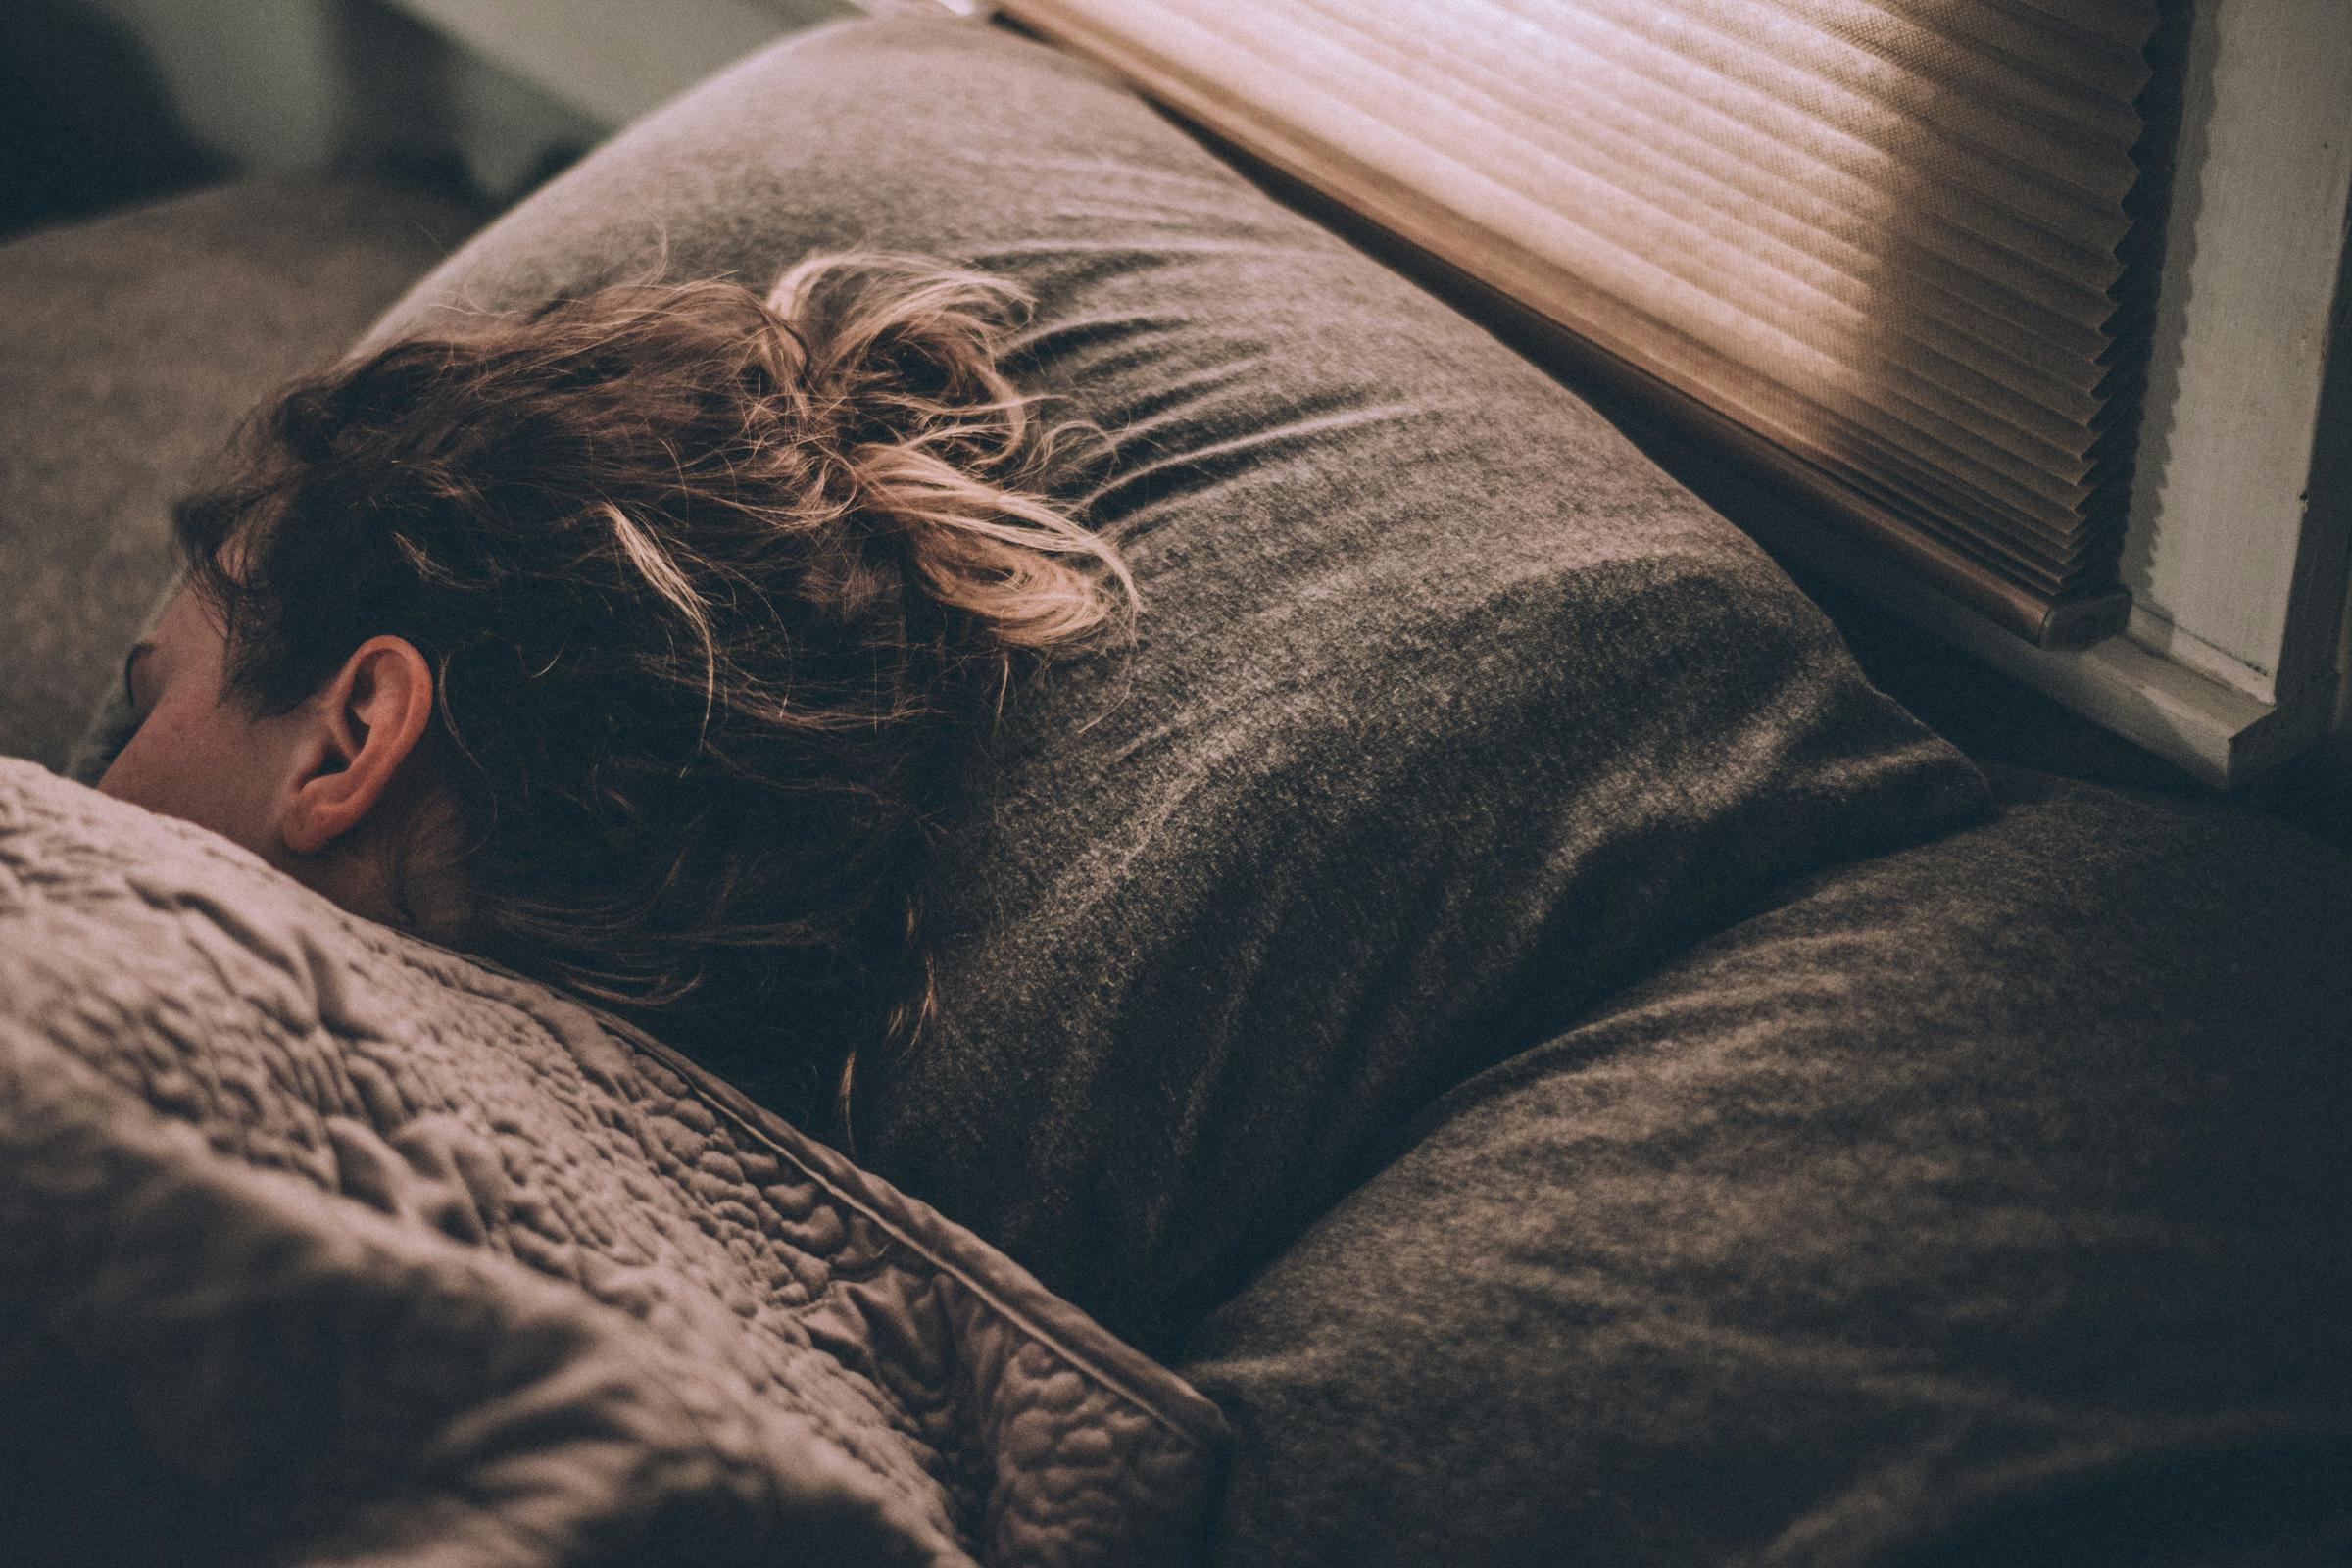 A woman sleeping in her bedroom | Source: Unsplash